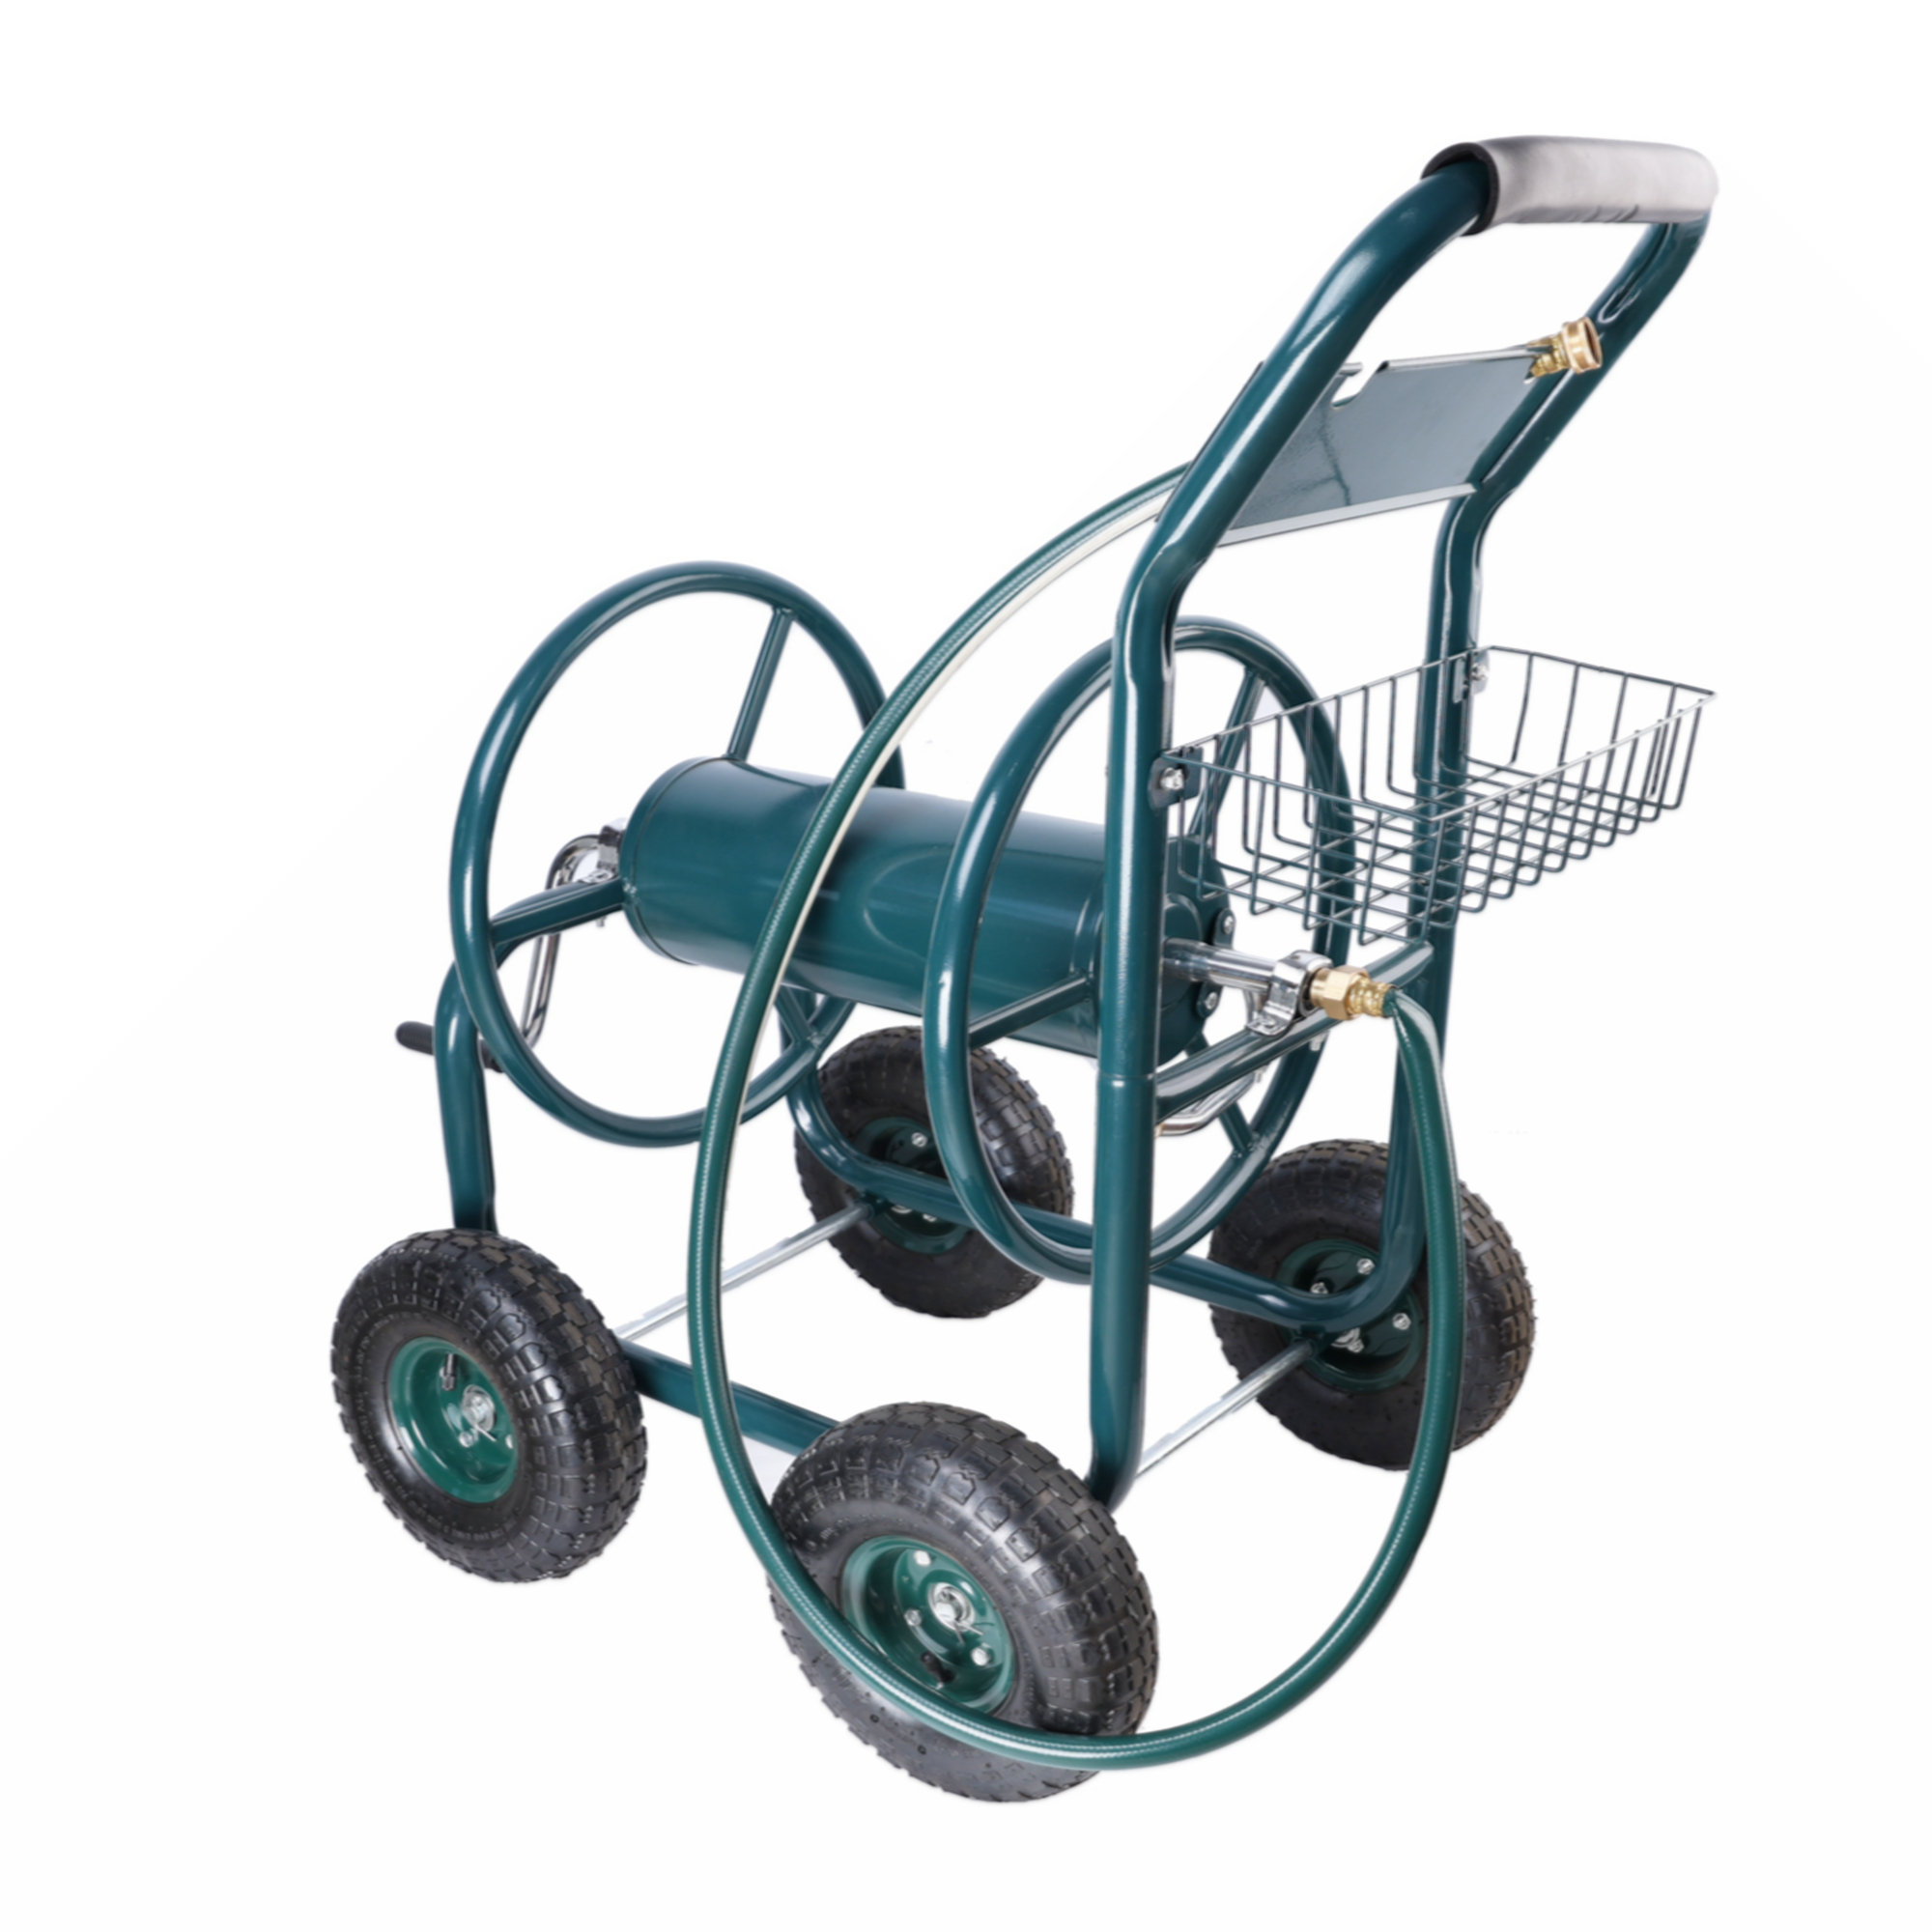 Myhomekeepers Garden Hose Reel Cart - 4 Wheels Portable Garden